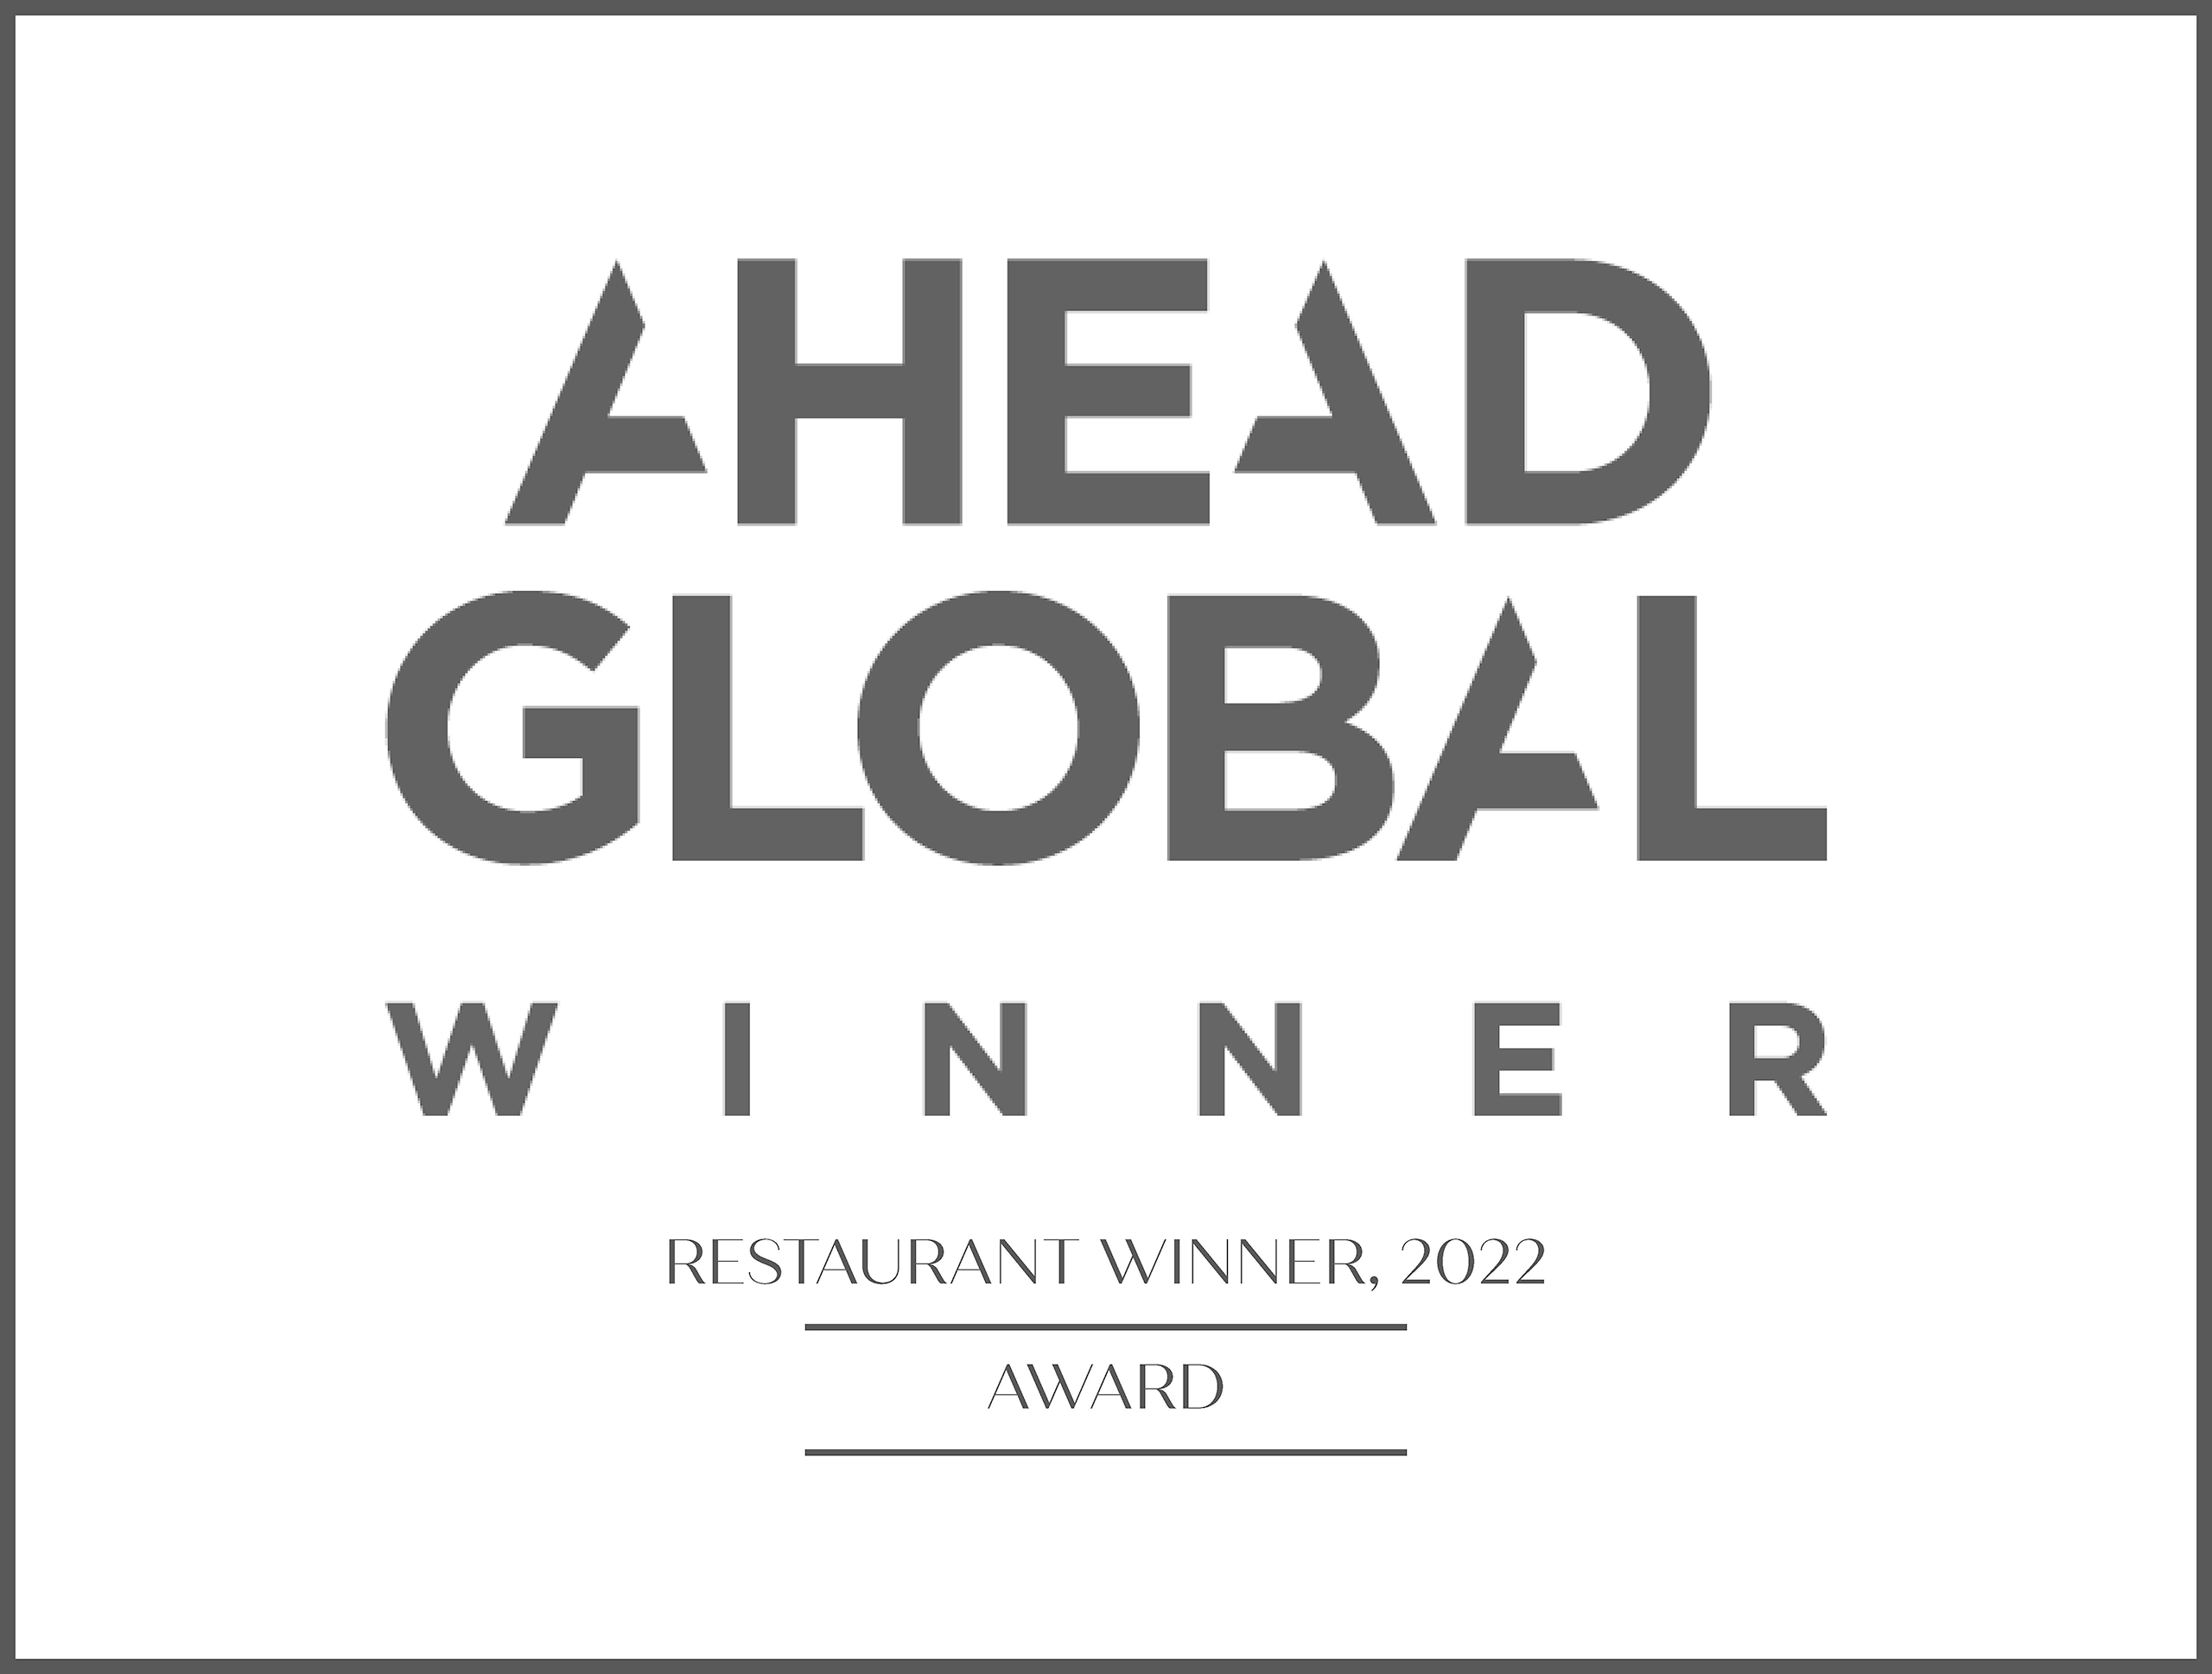 Ahead Global restaurant award 2022 Winner